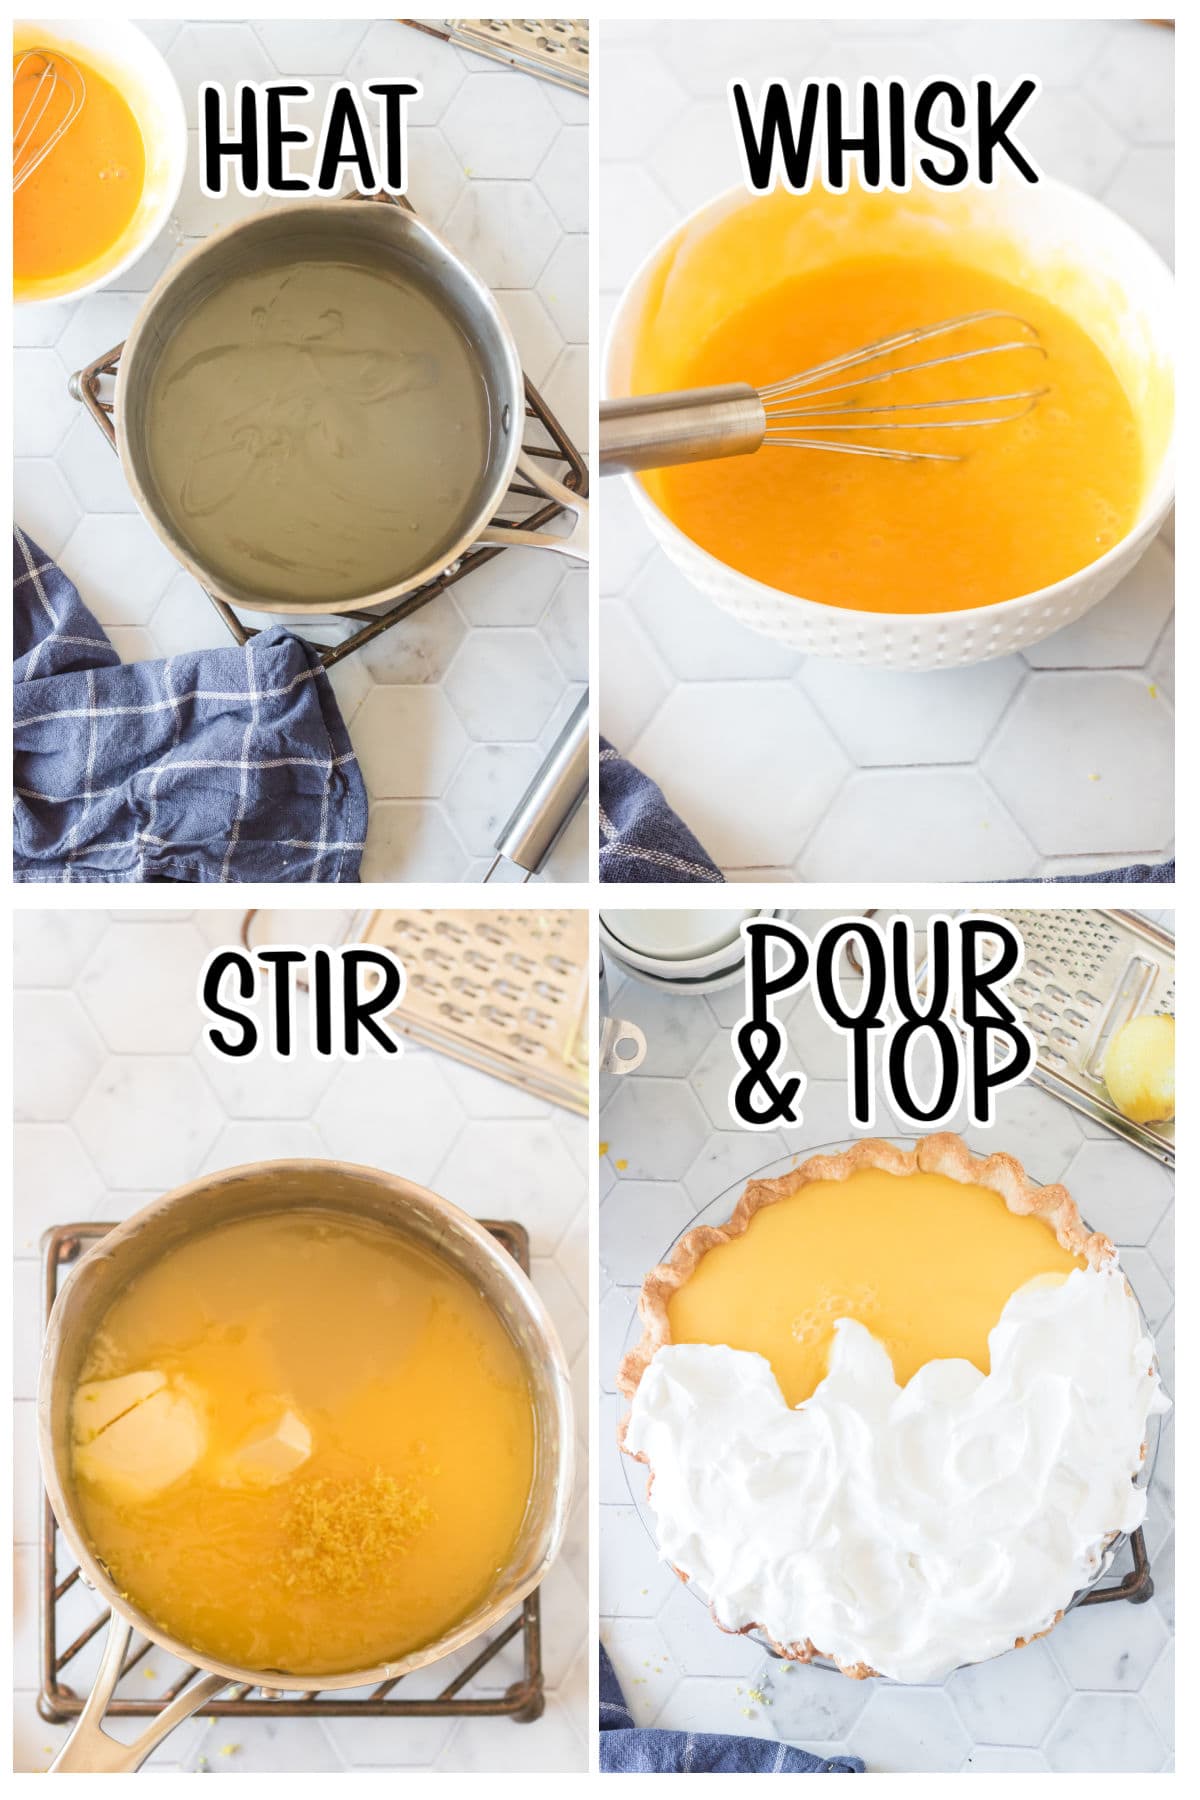 Lemon meringue pie step by step instructions.